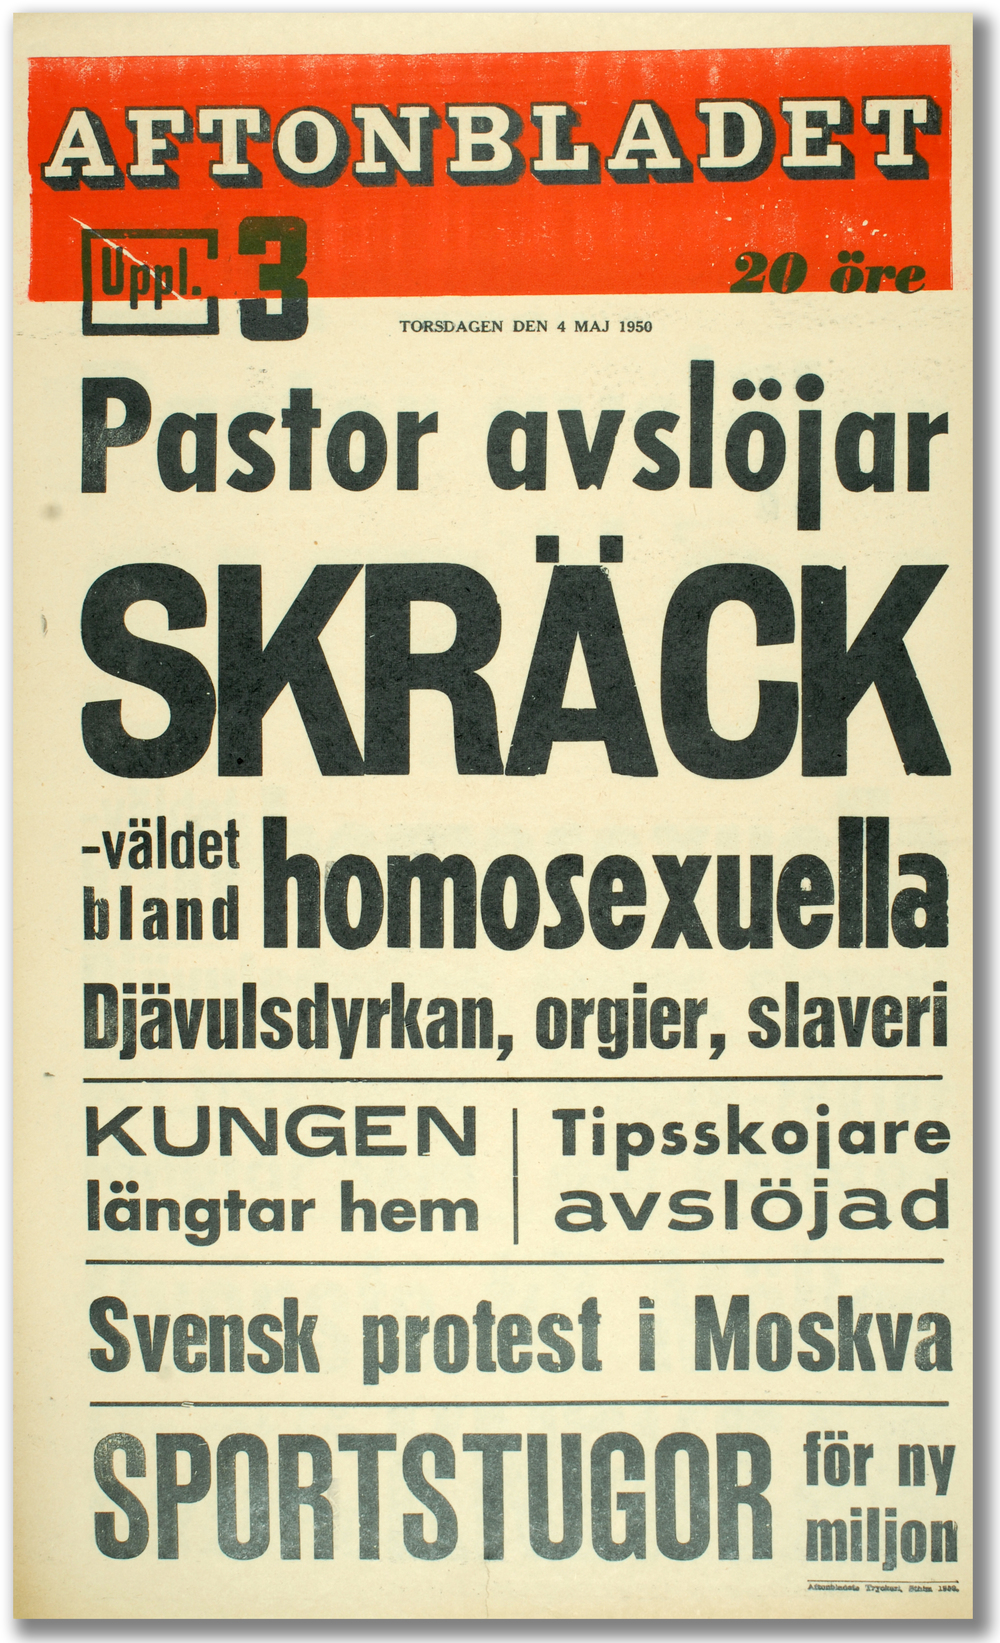  Något stort på spåren. Aftonbladet, 4 maj 1950. 